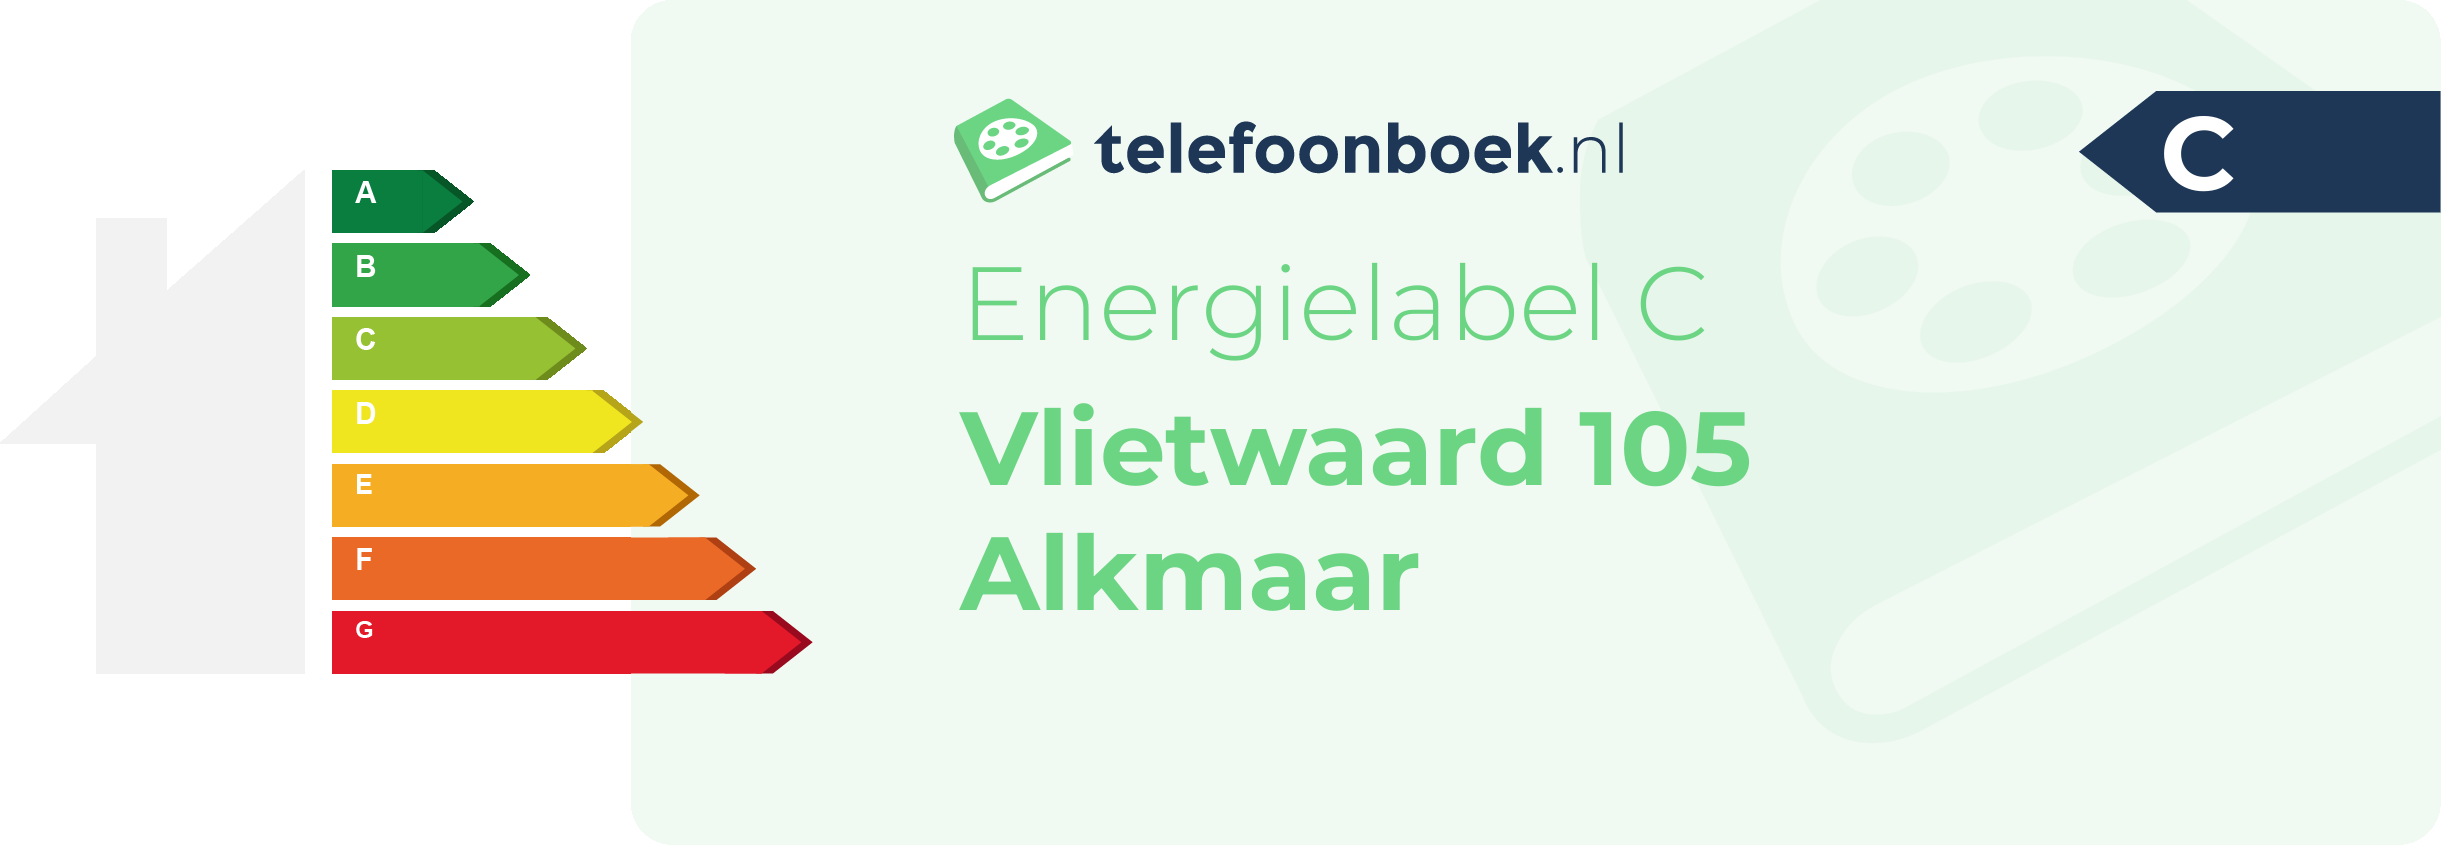 Energielabel Vlietwaard 105 Alkmaar